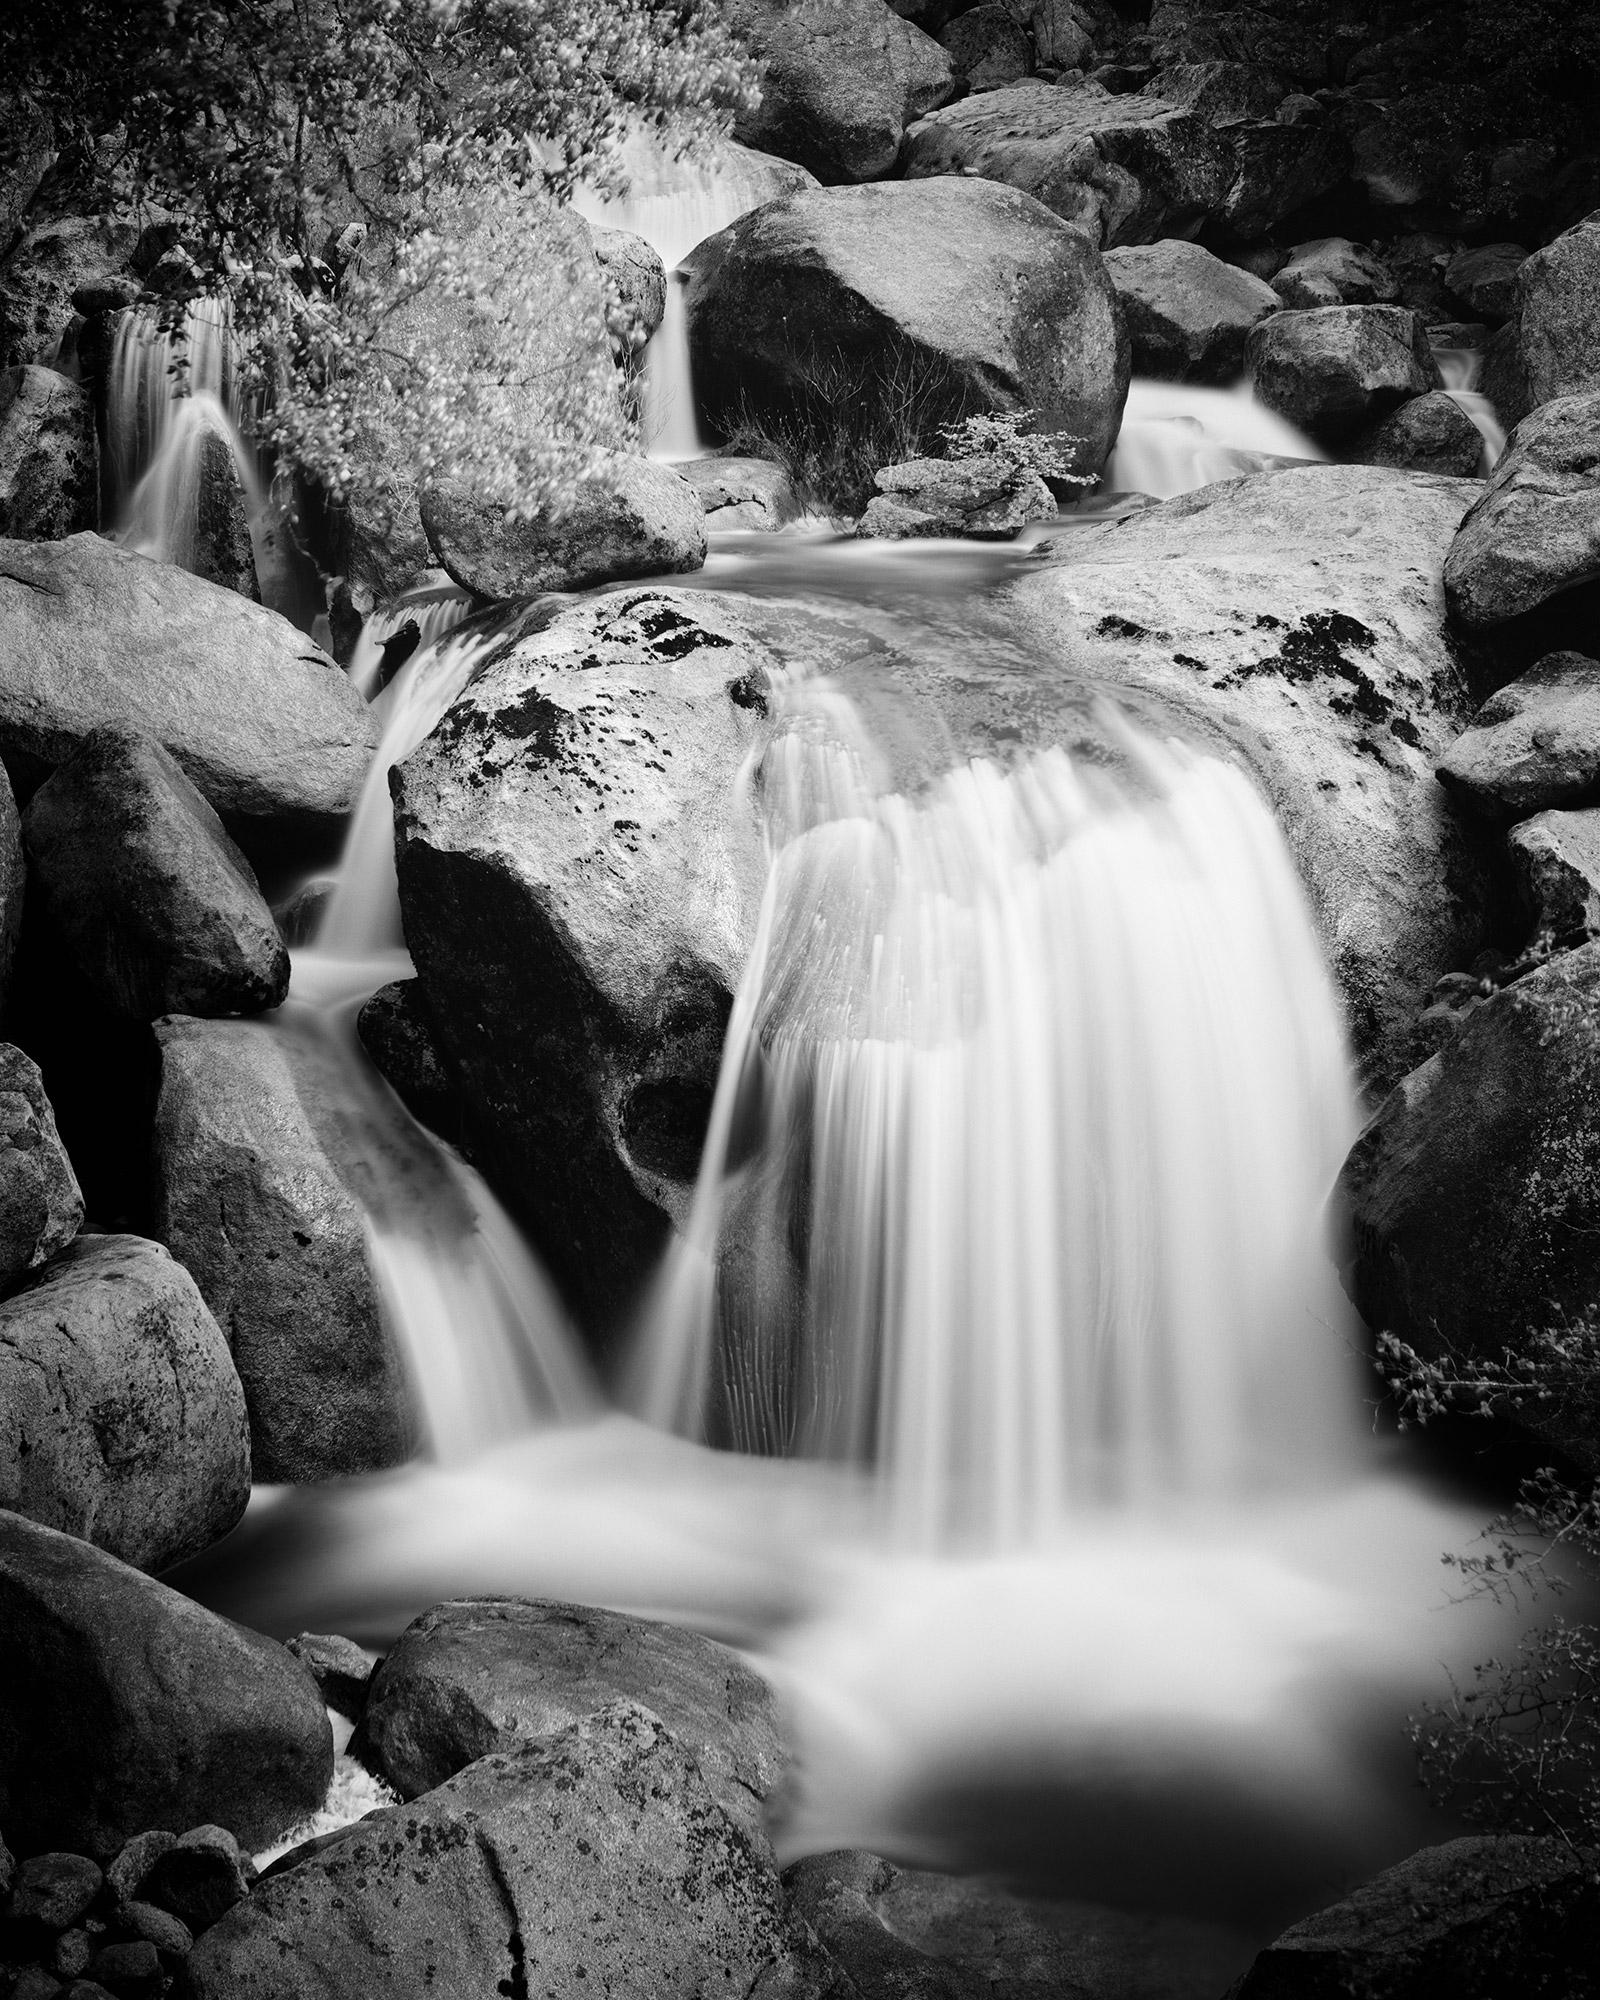 Gerald Berghammer Landscape Photograph - Stony Mountain Stream, California, USA, black and white photography, landscape